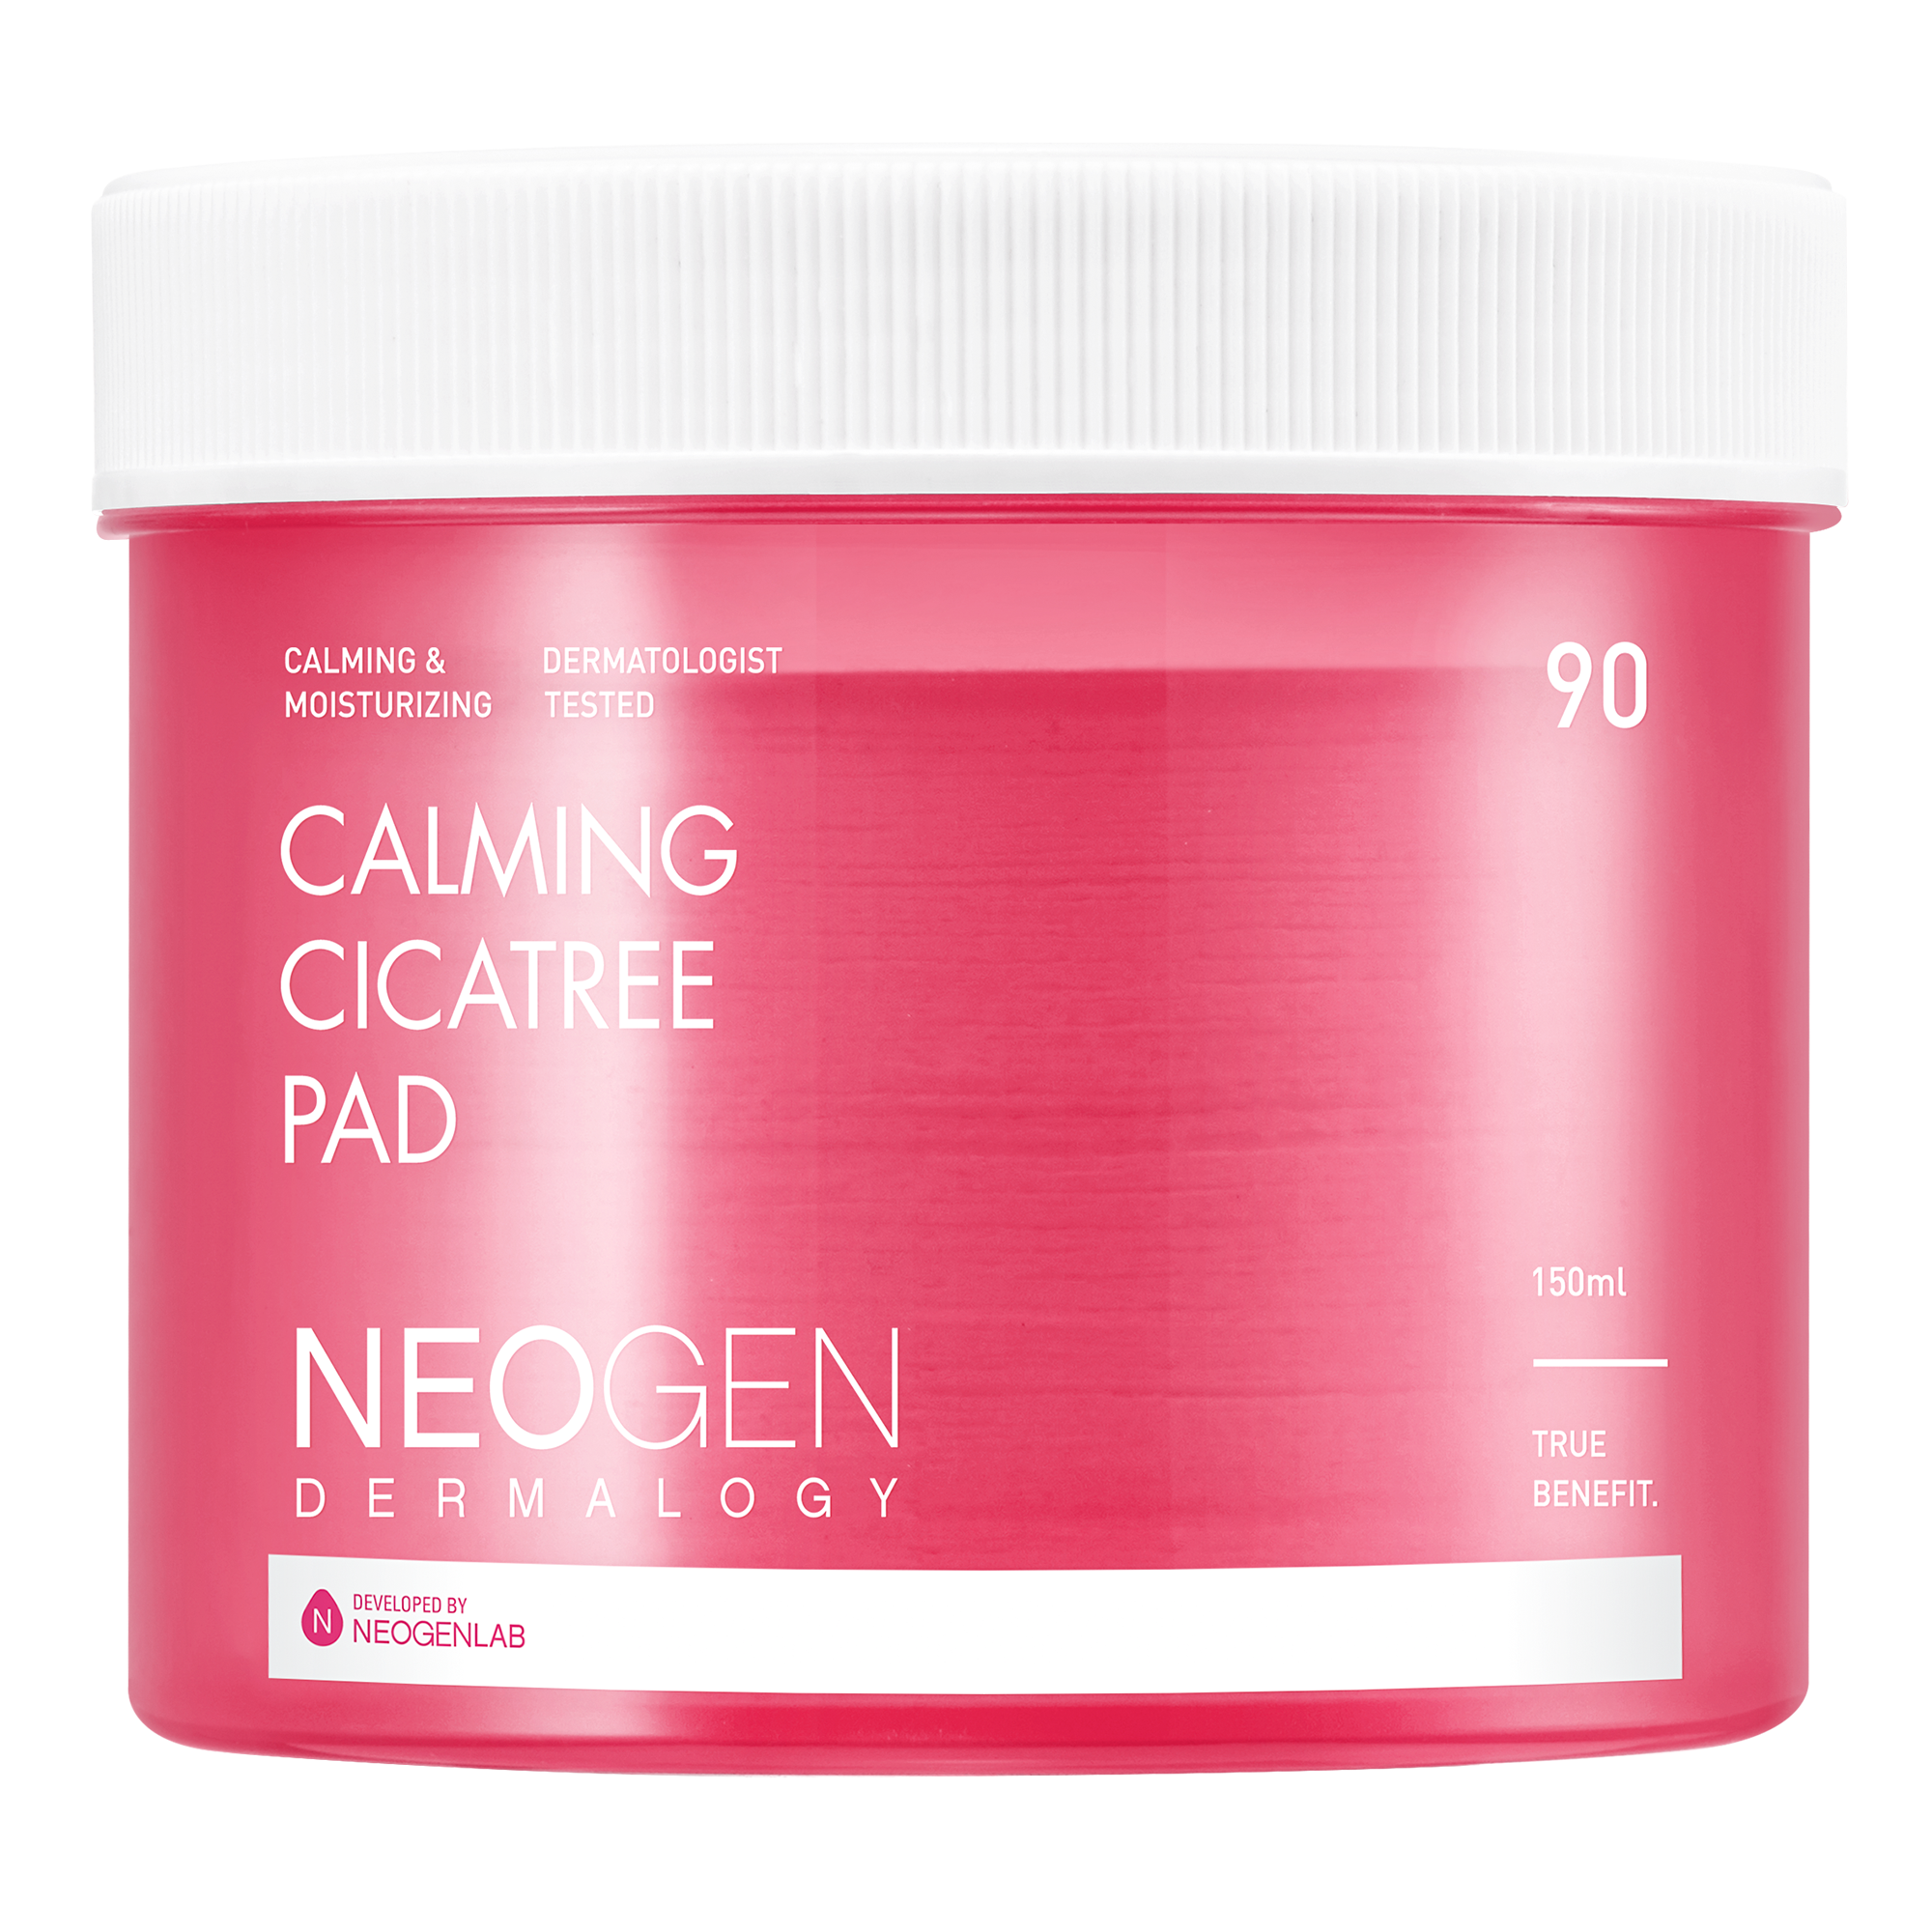 Neogen Dermalogy Calming Cica Tree Pad 150ml, 90ea